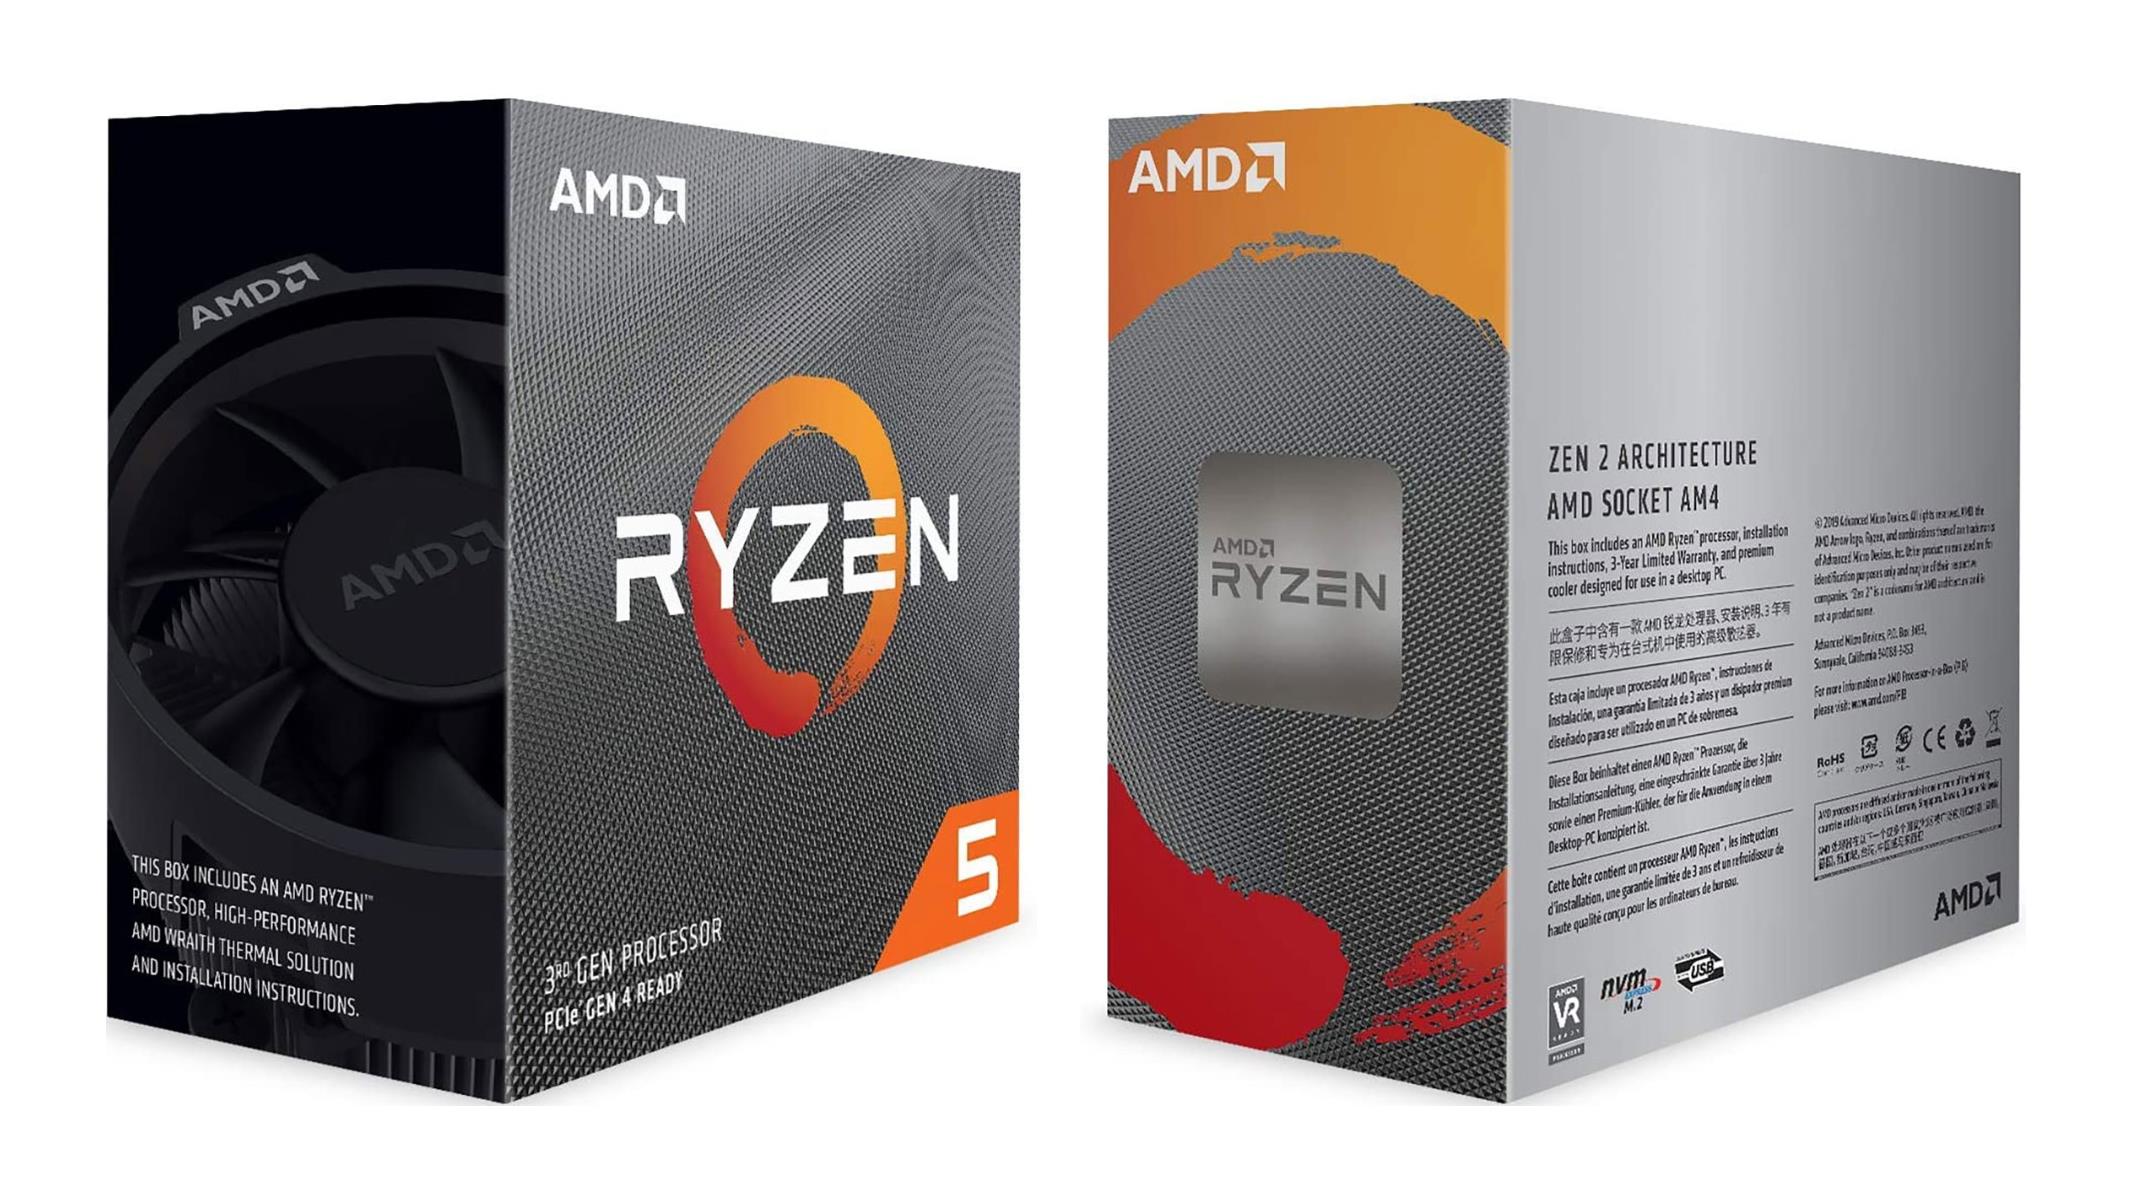 AMD's Ryzen 5 3600 Zen 2 CPU Is A Smoking Hot Tech Bargain Now At